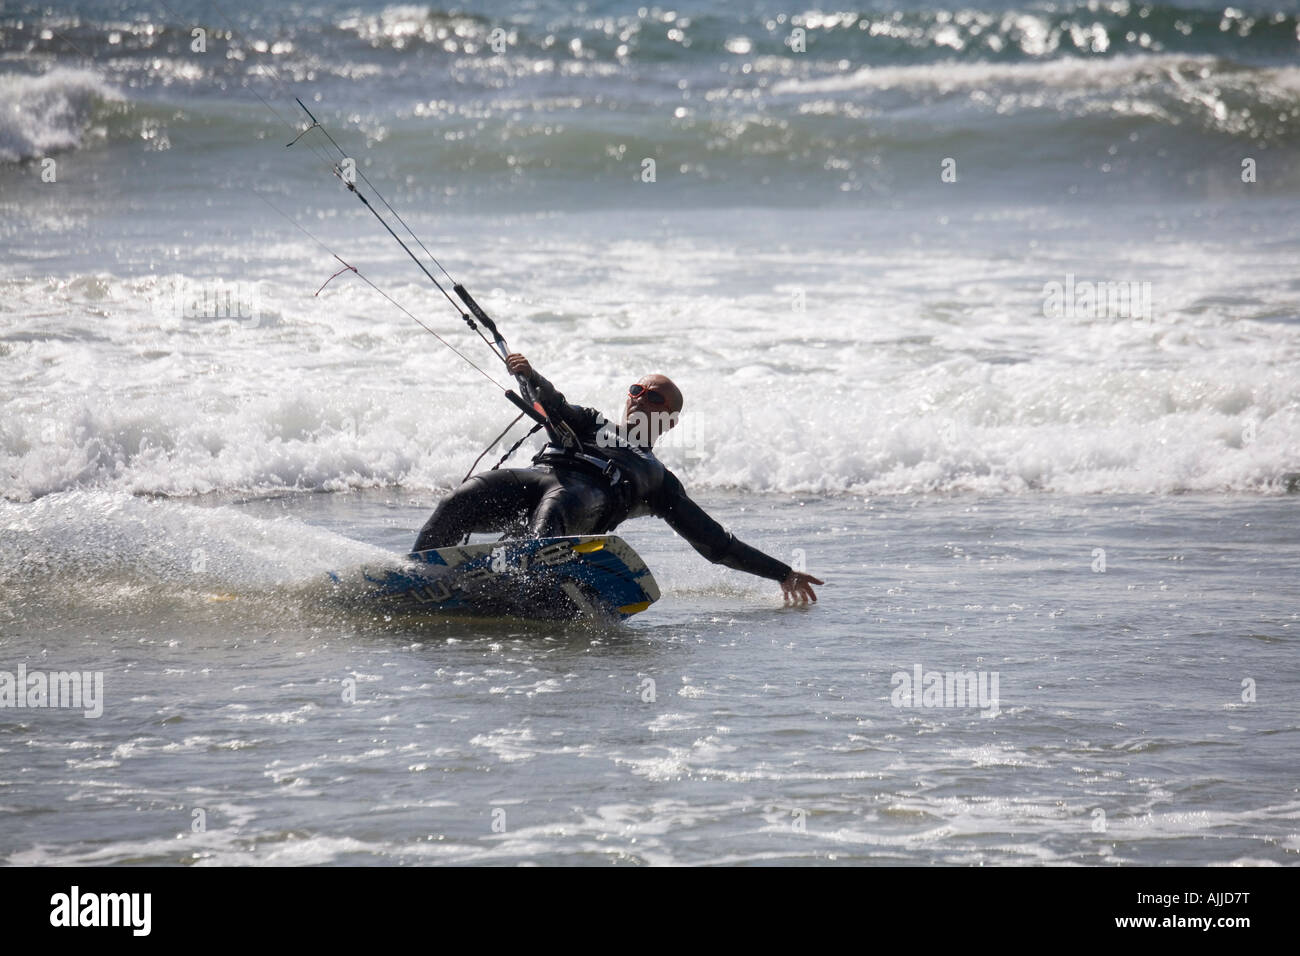 A man in a wetsuit parasurfs along a California beach. Stock Photo